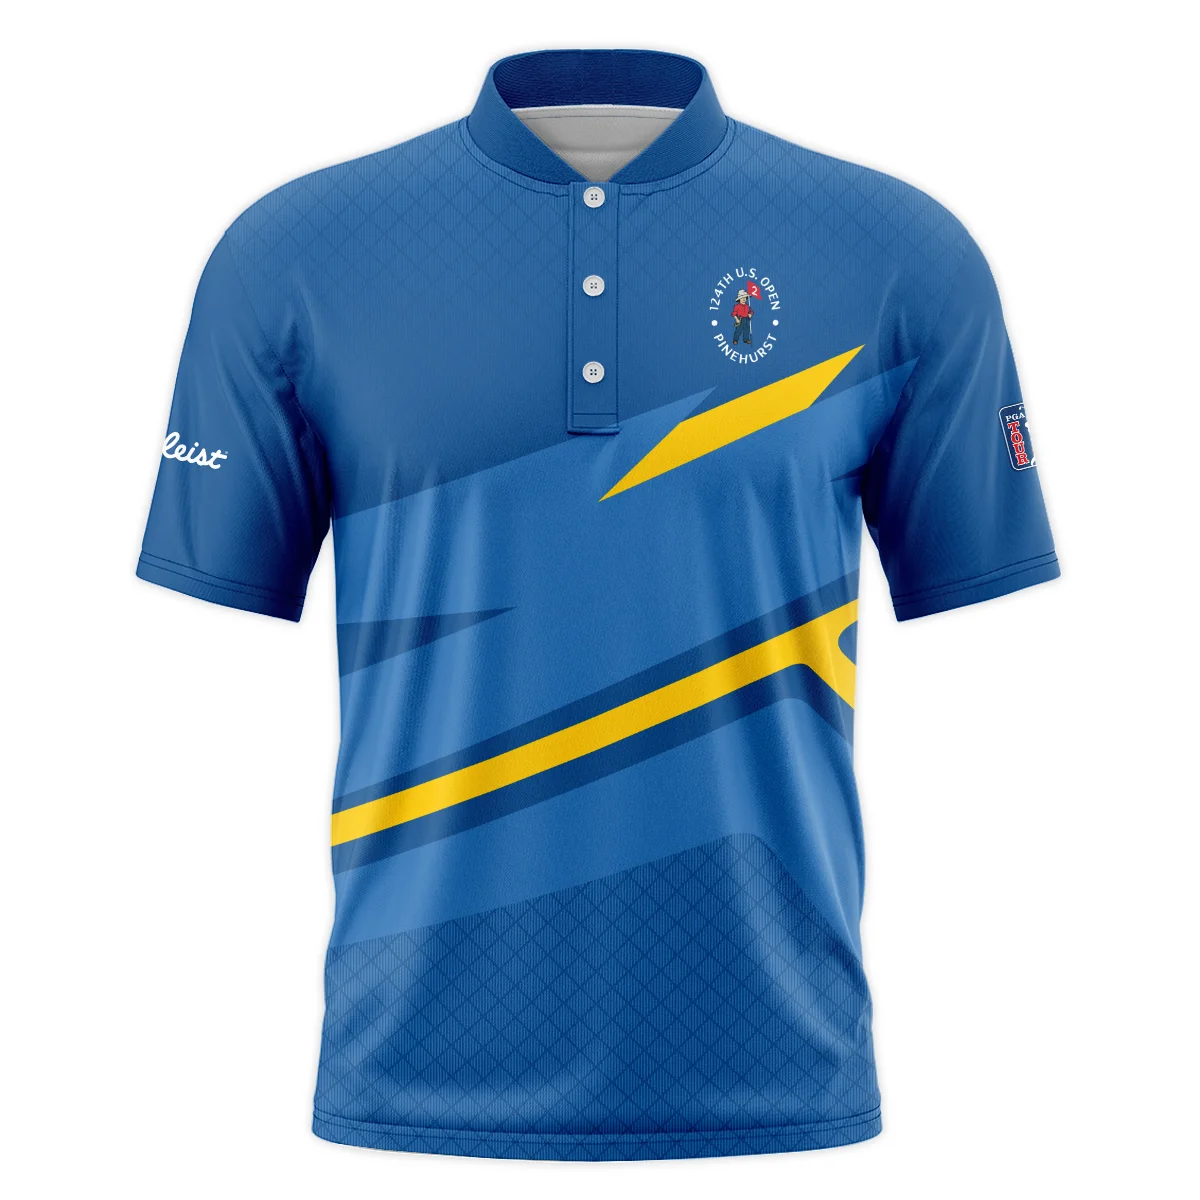 Titleist 124th U.S. Open Pinehurst Blue Yellow Mix Pattern Vneck Polo Shirt Style Classic